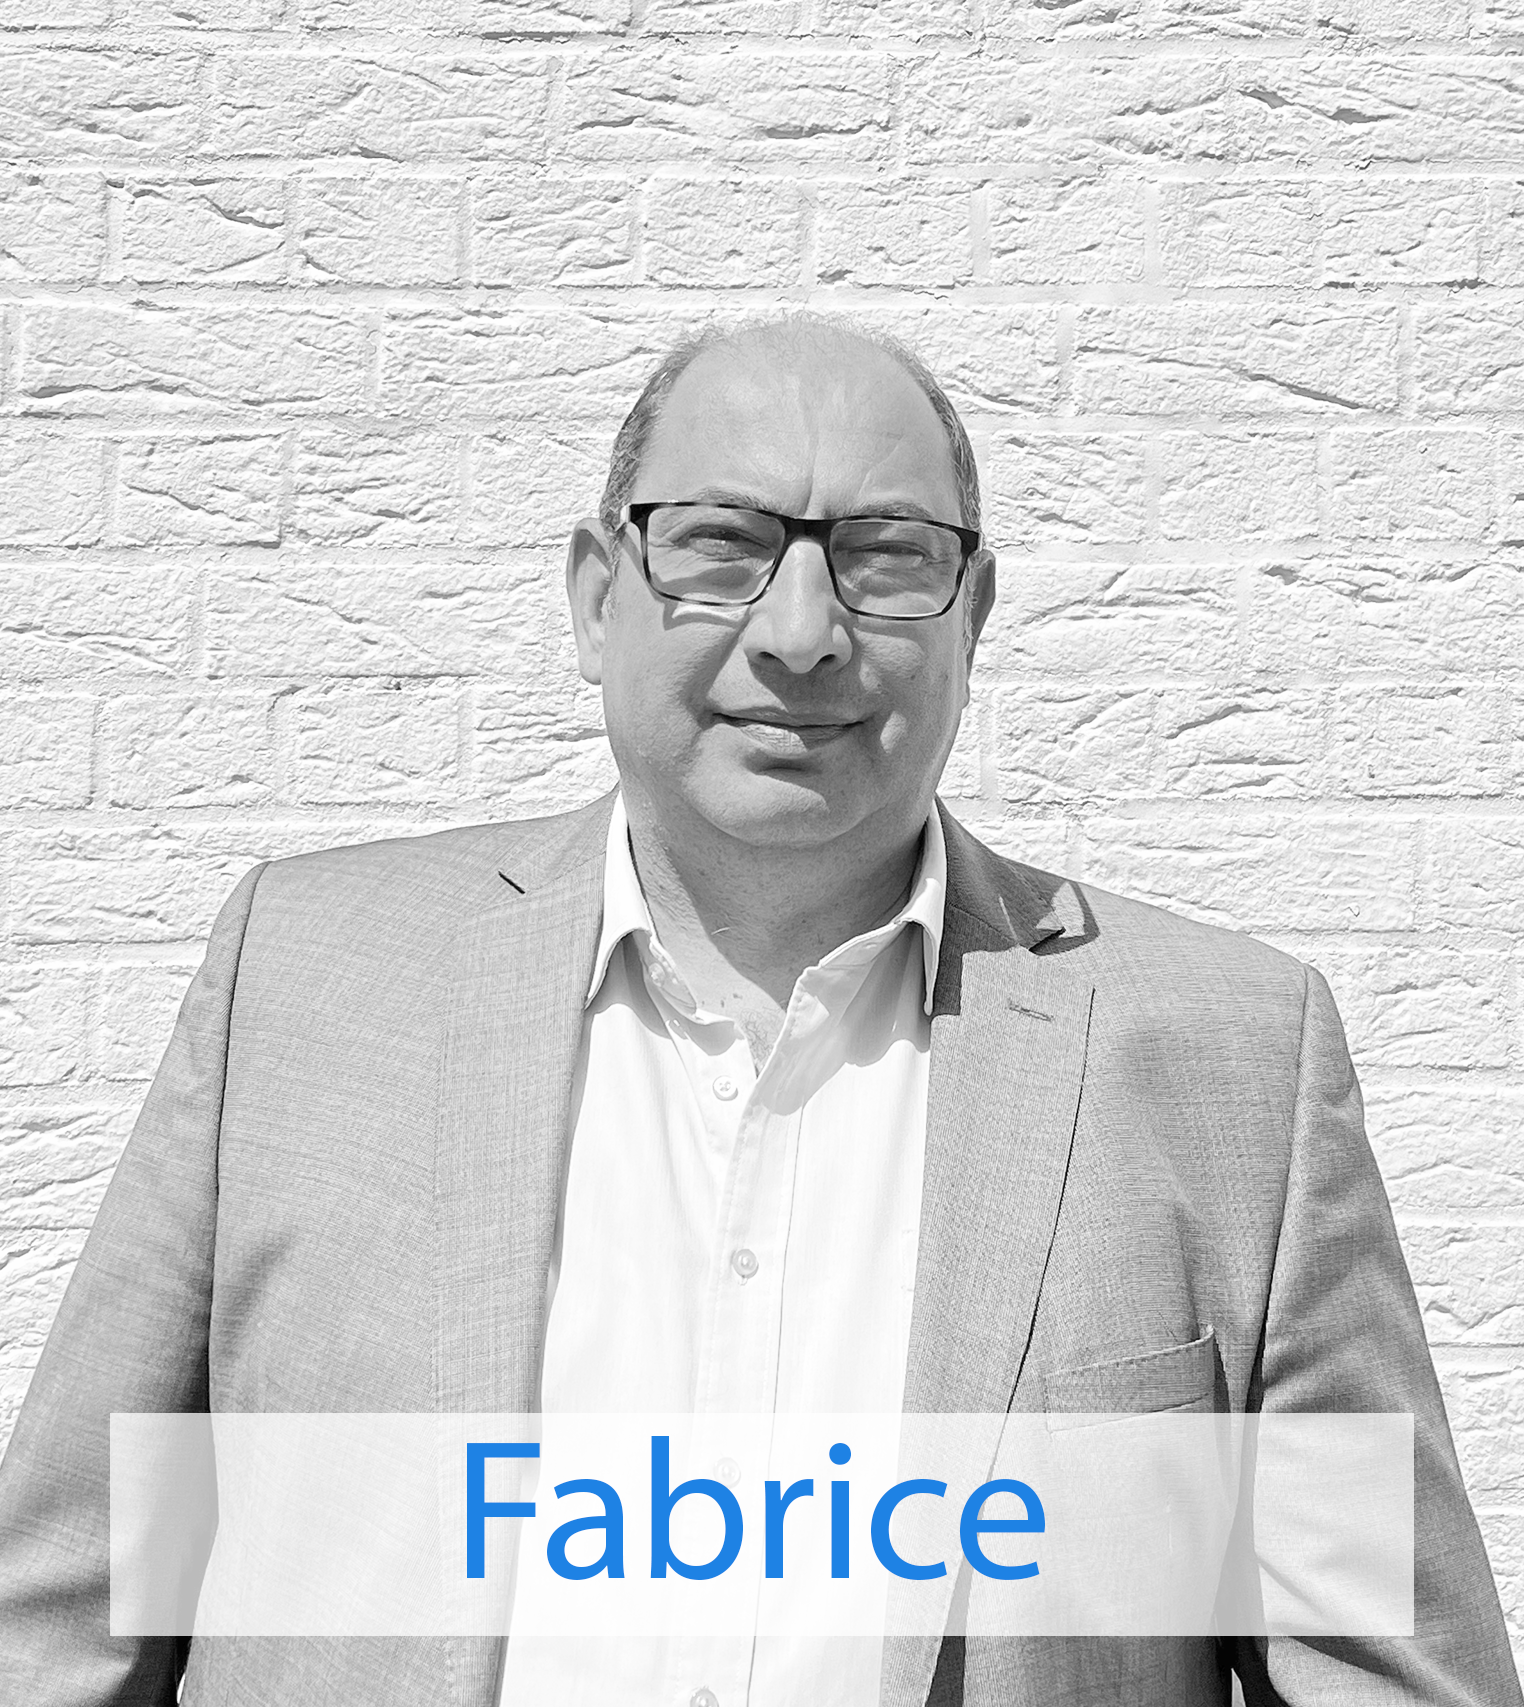 Meet me Fabrice